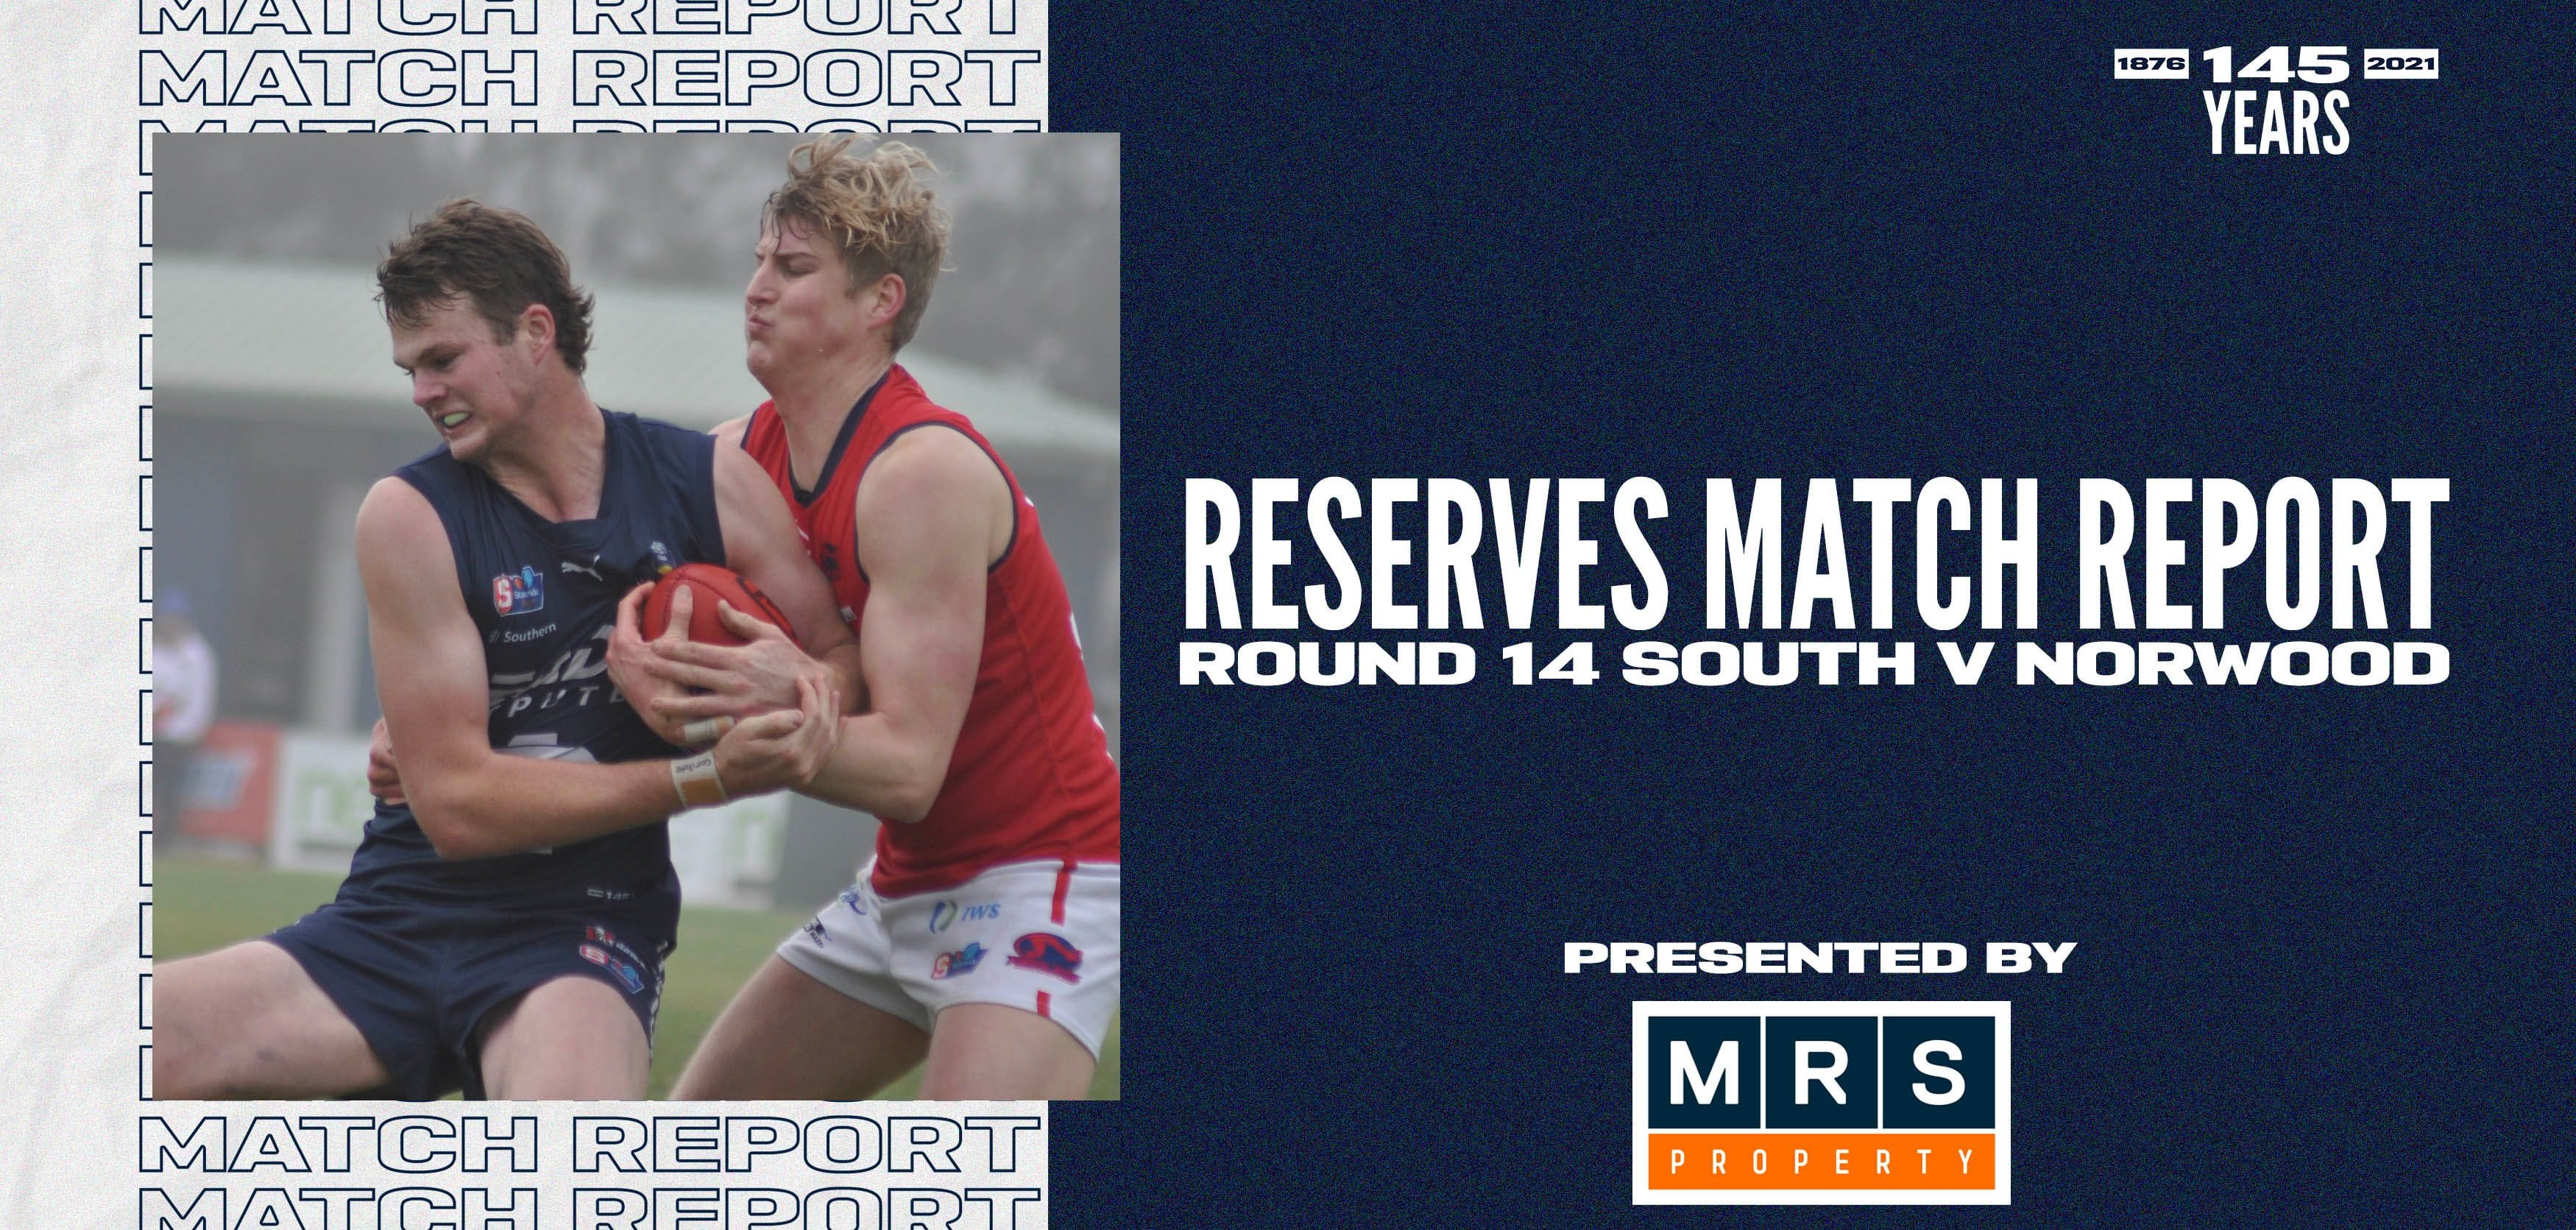 MRS Property Reserves Match Report Round 14: vs Norwood